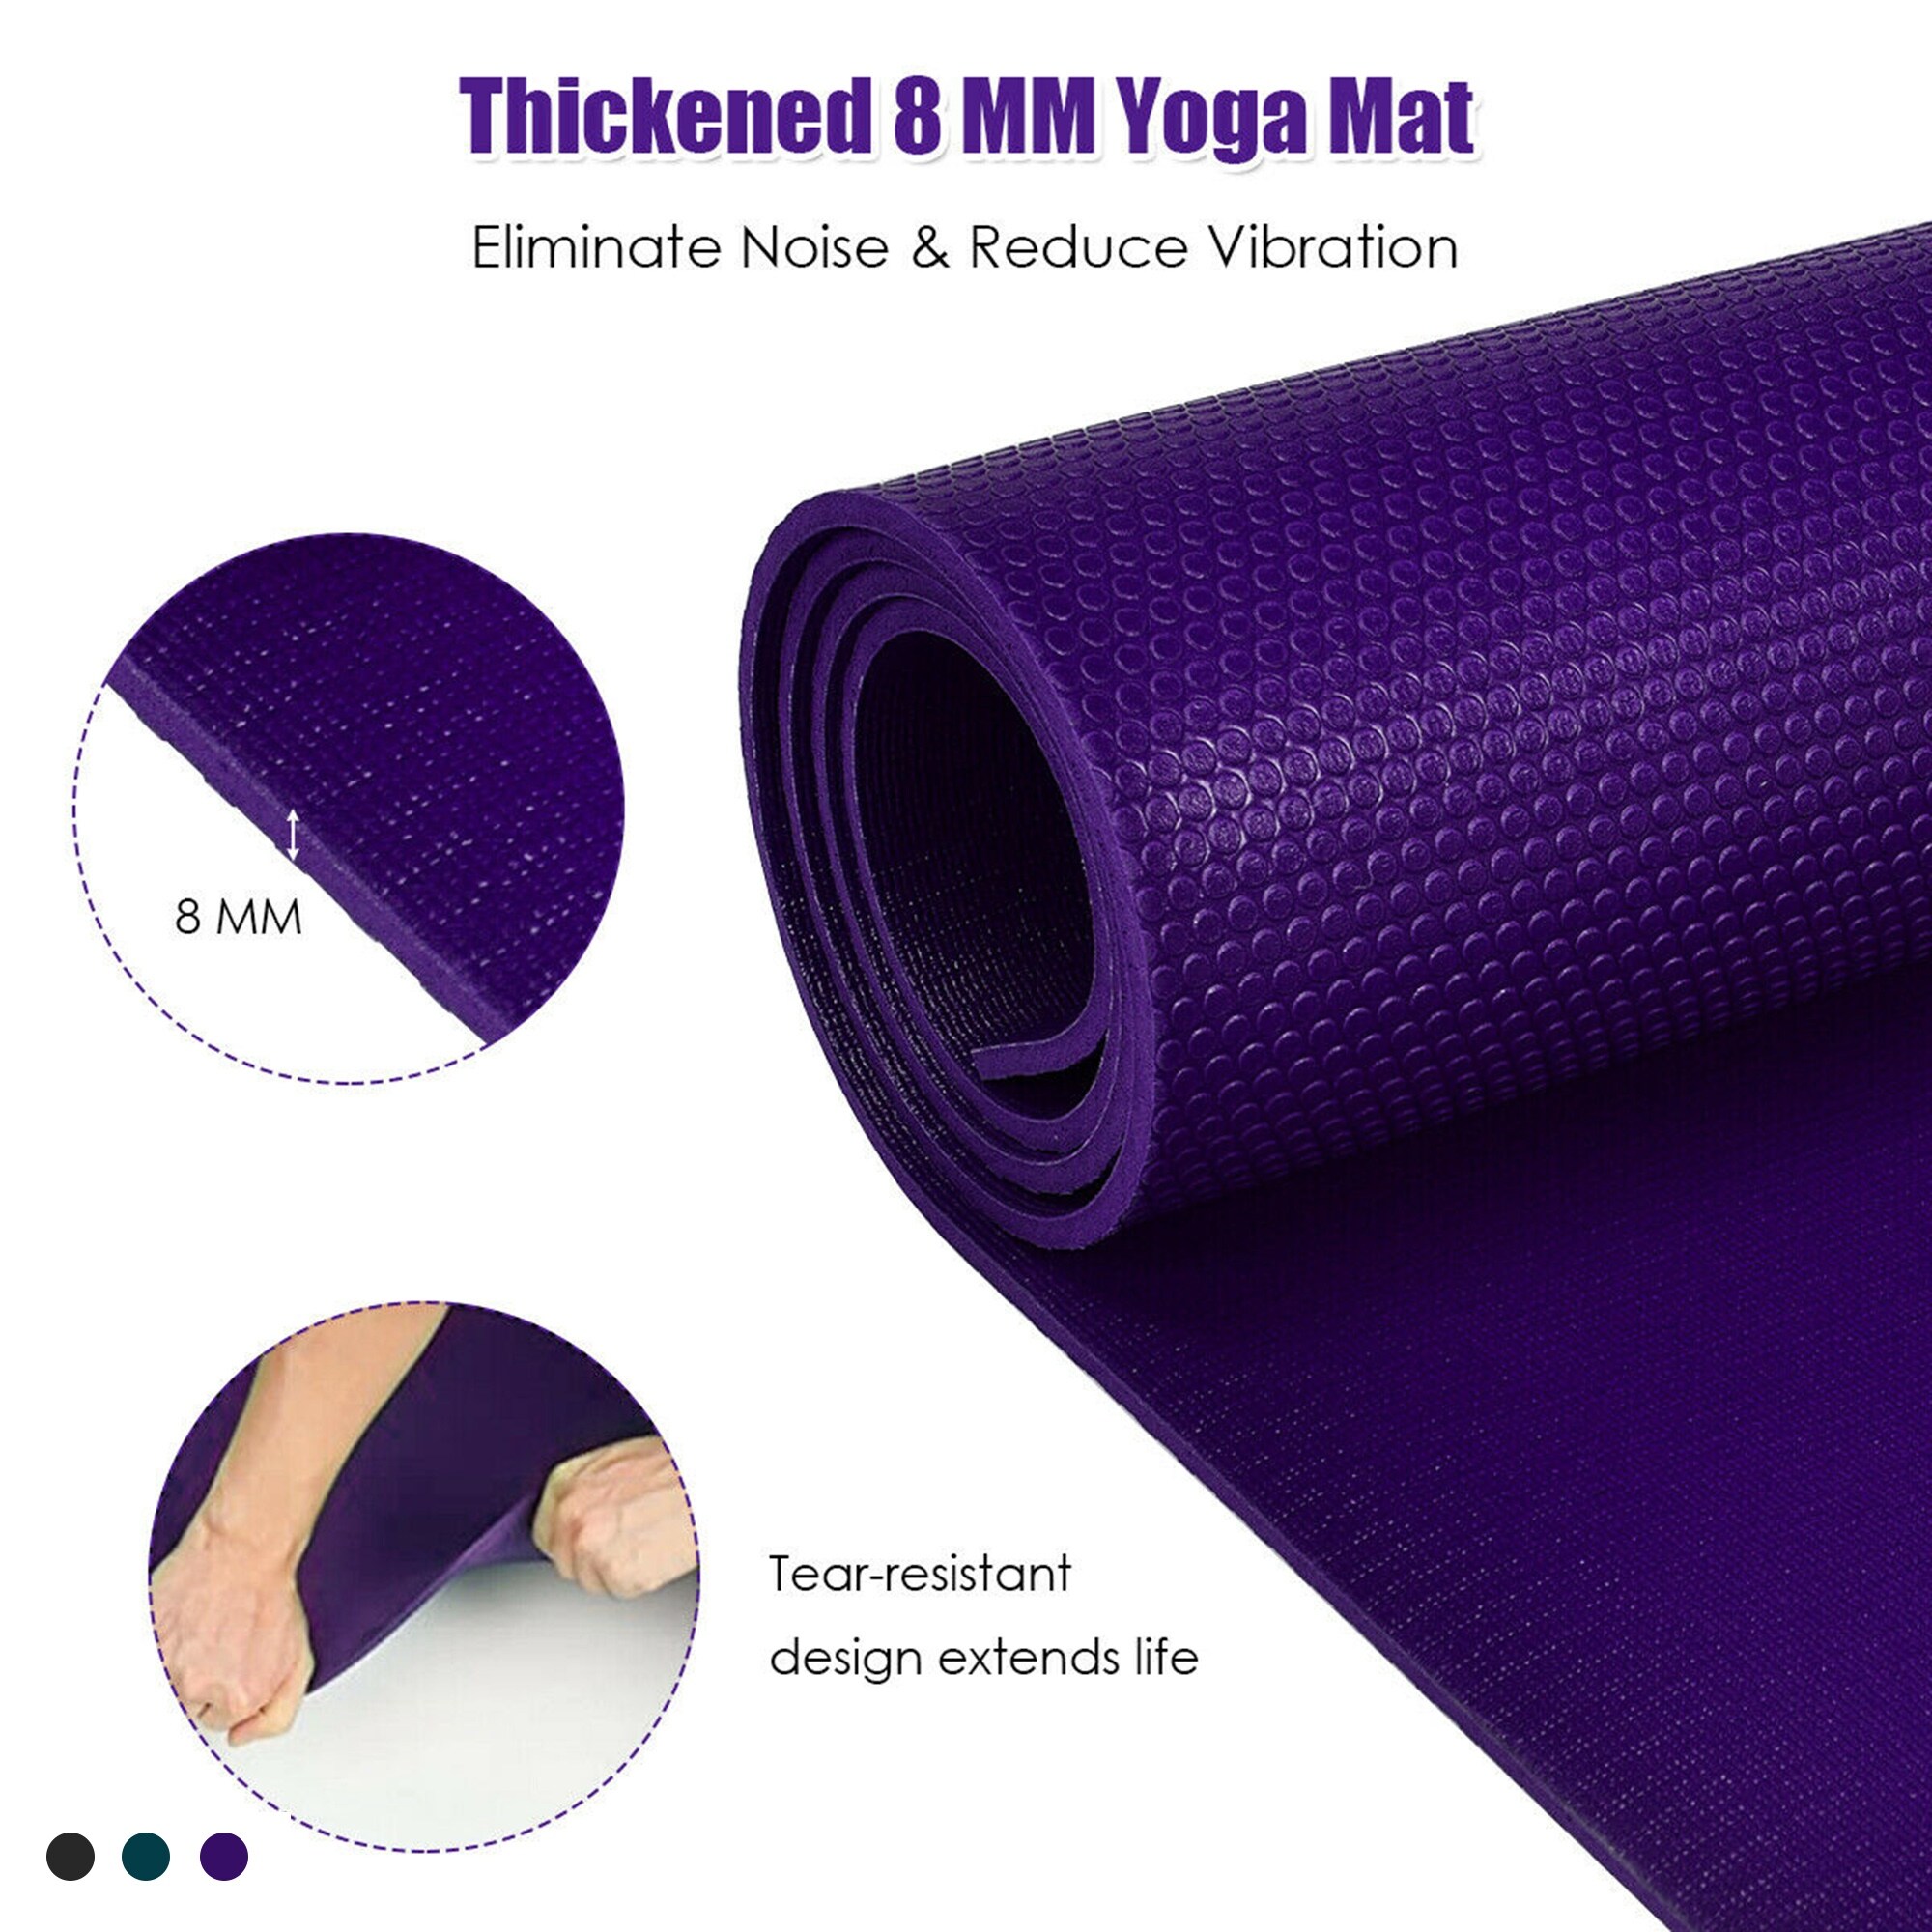 7' x 5' x 8mm Extra Thick & Comfortable Purple Premium Extra Large Yoga Mat 